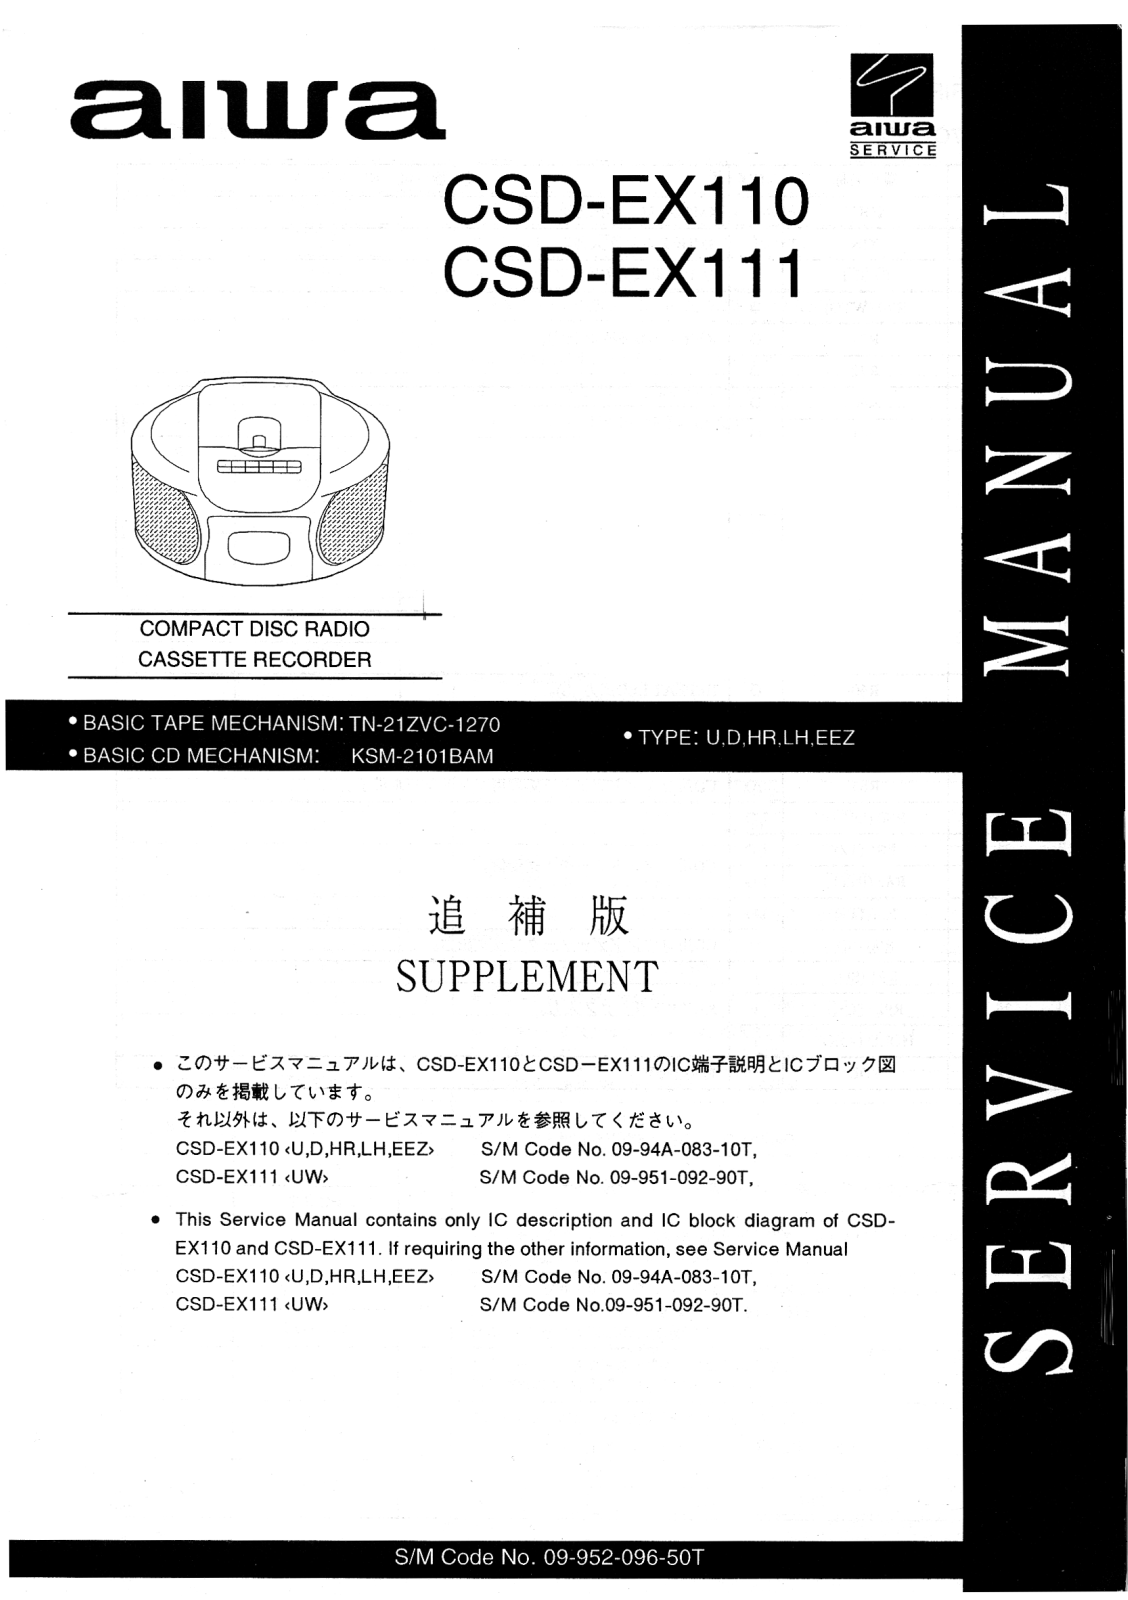 Aiwa CSD-EX110, CSD-EX111 Service Manual